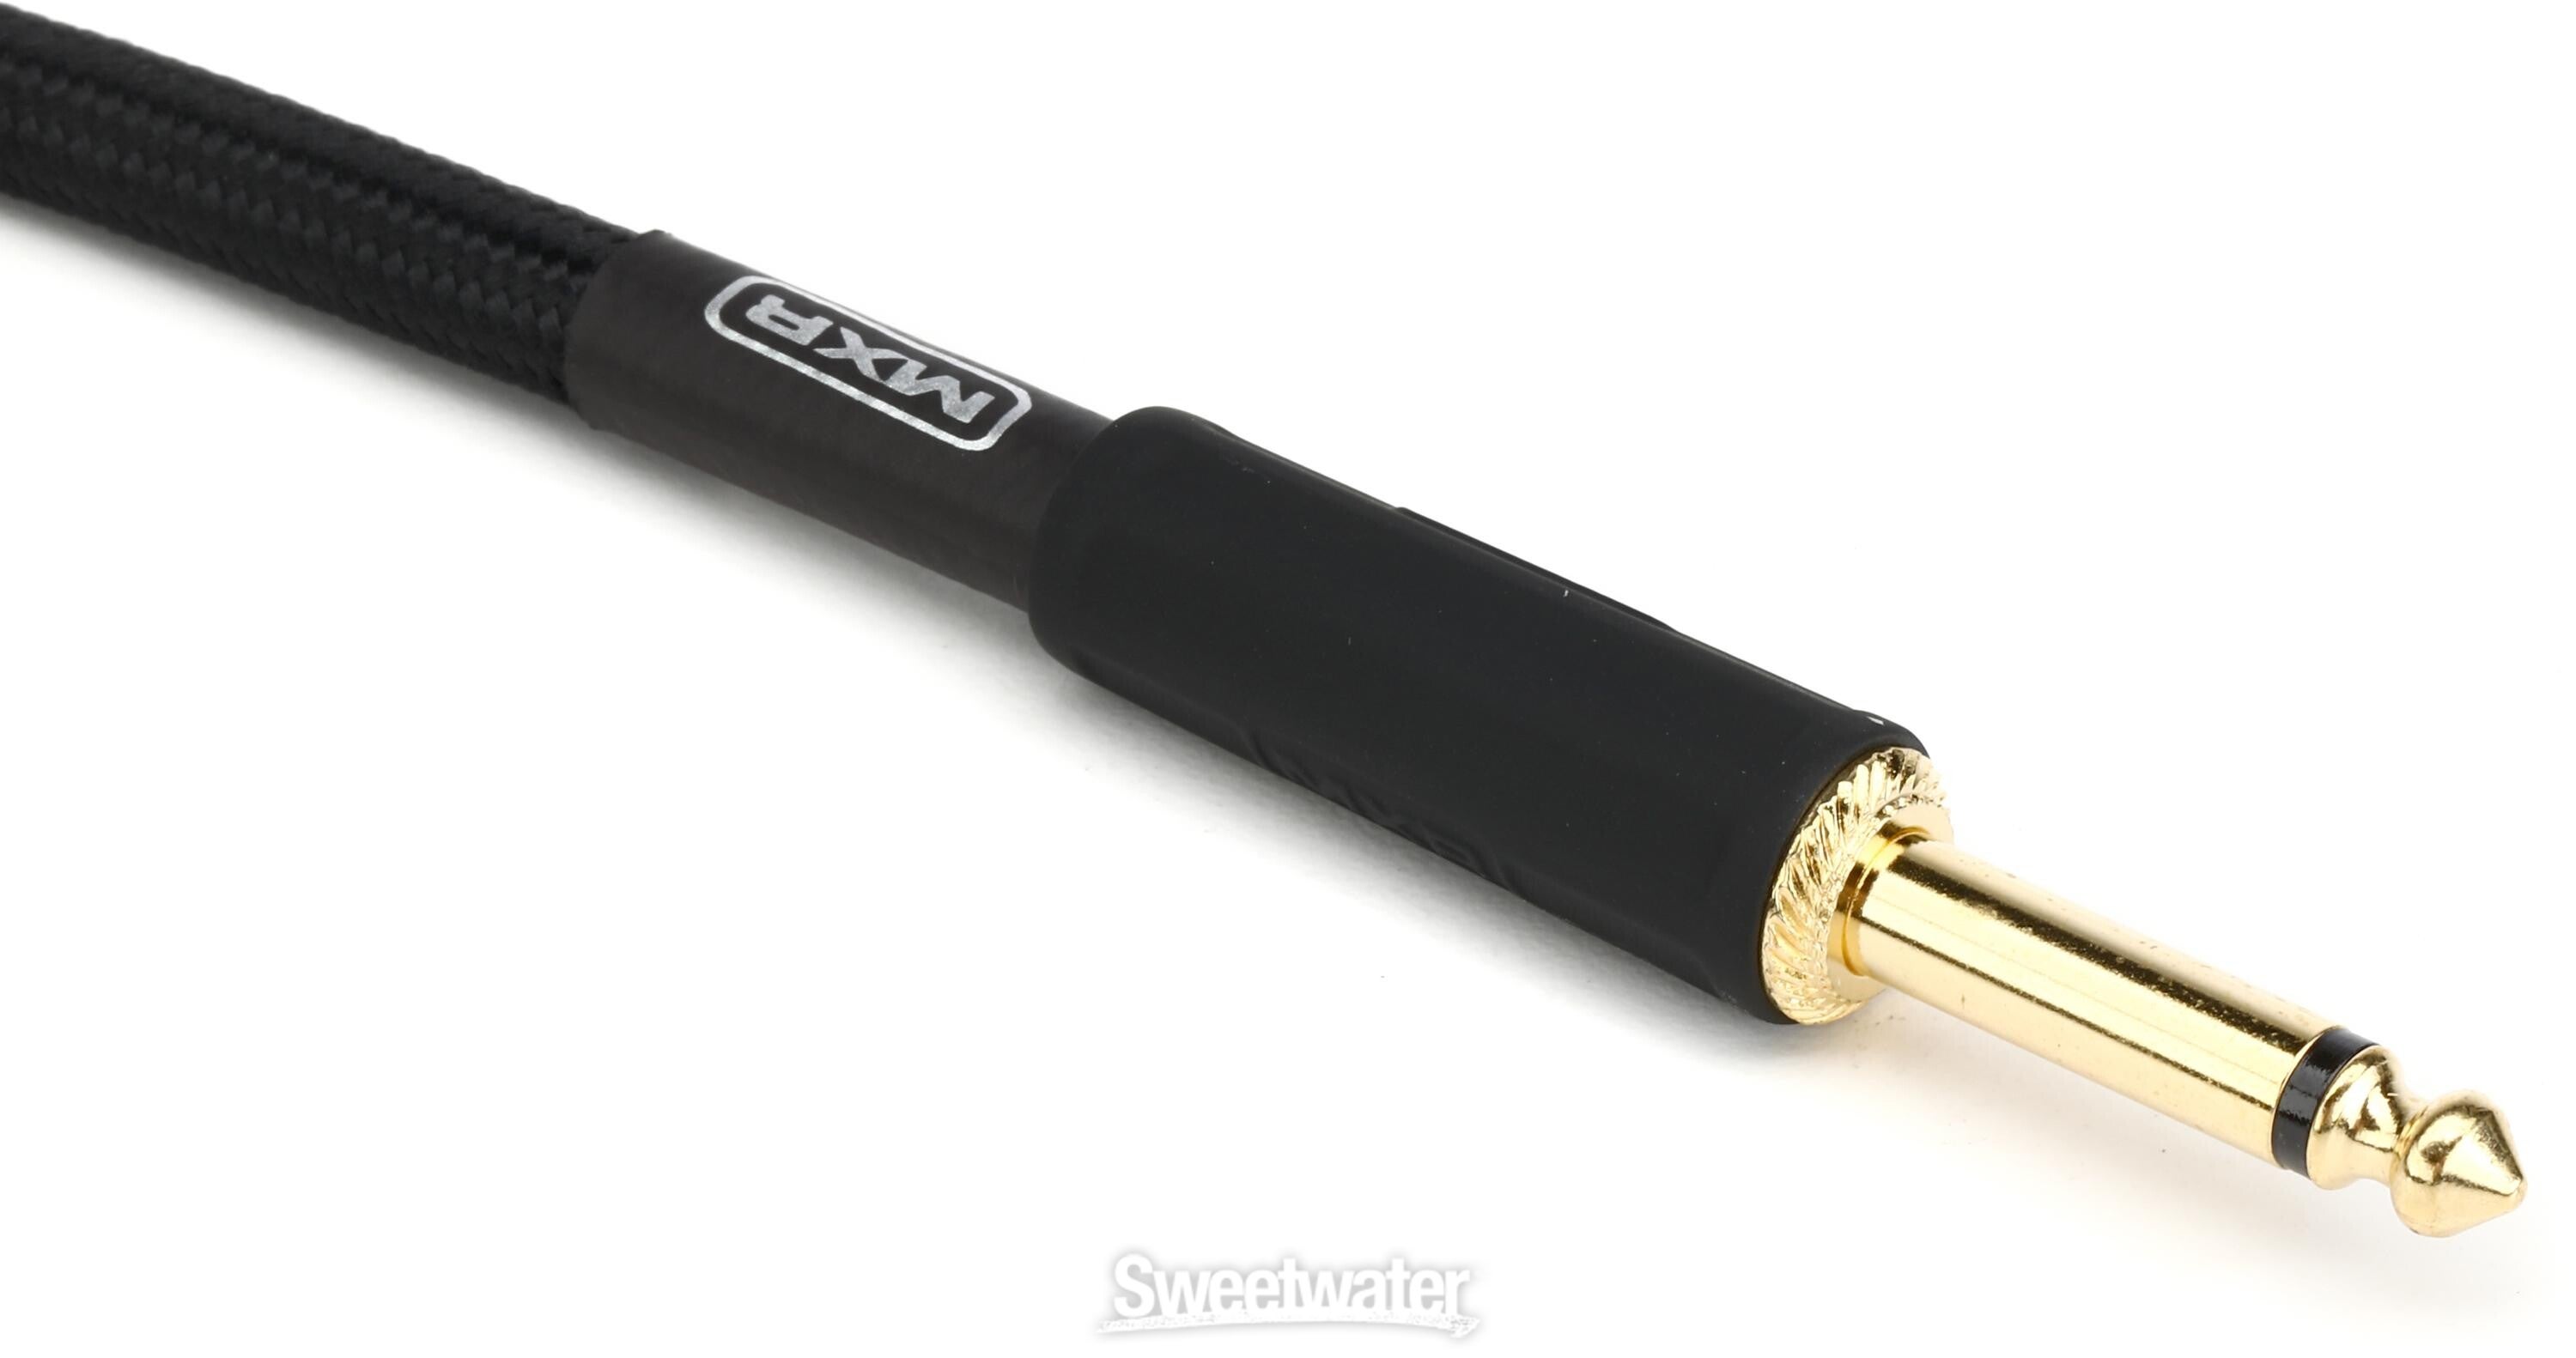 Dunlop DCIR10 MXR Stealth Series Instrument Cable - 10-foot 